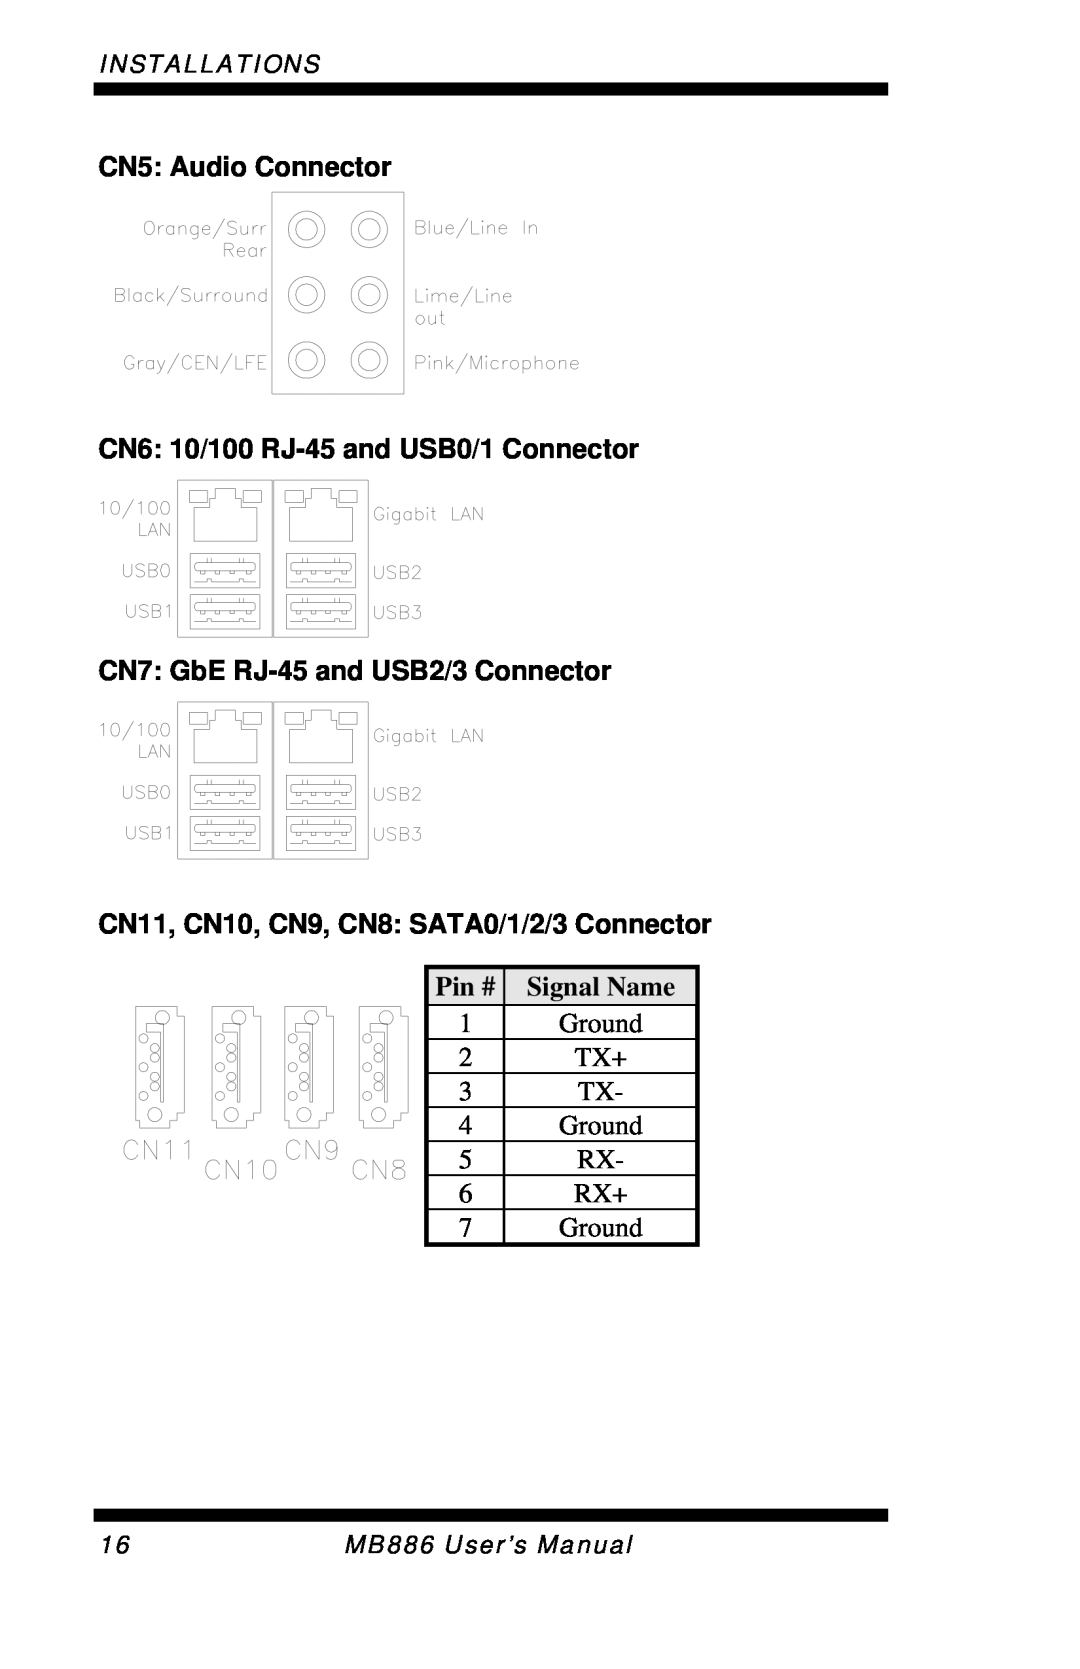 Intel MB886 user manual CN5 Audio Connector, CN6 10/100 RJ-45and USB0/1 Connector, CN7 GbE RJ-45and USB2/3 Connector 